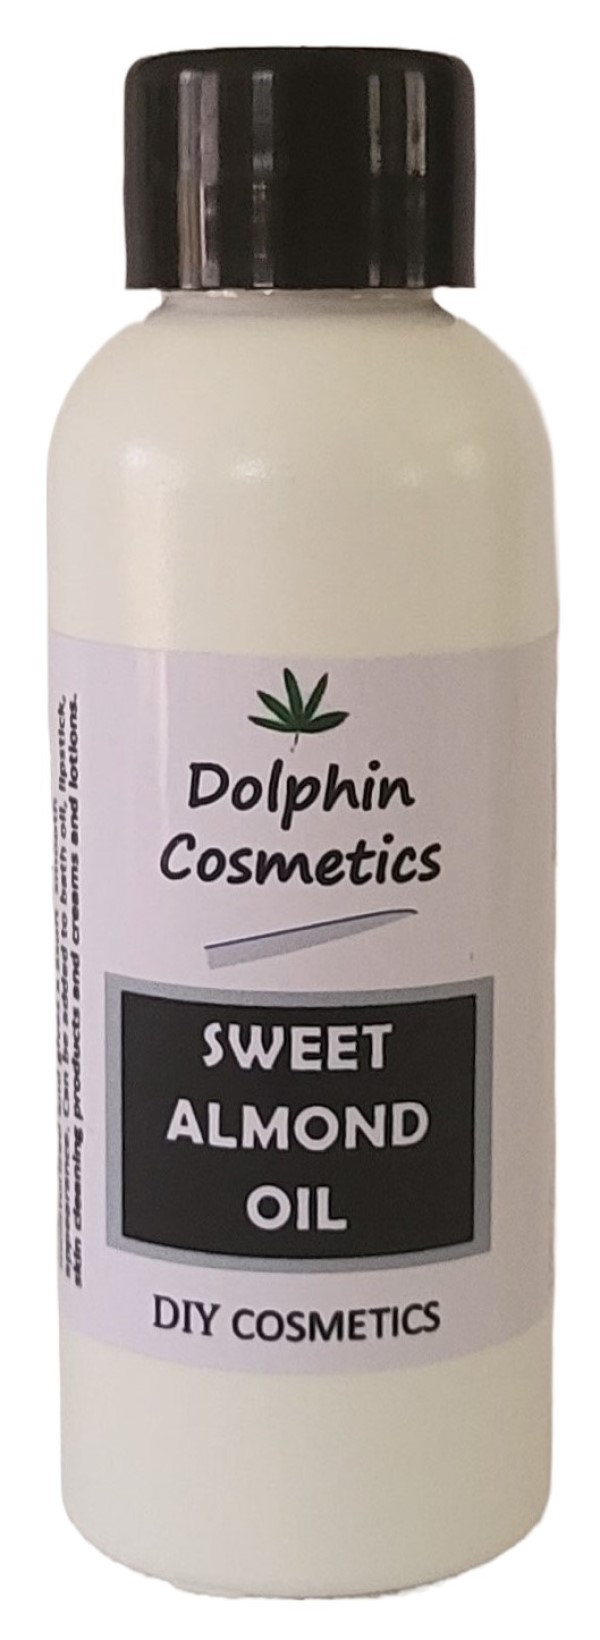 dolphin-cosmetics-sweet-almond-oil